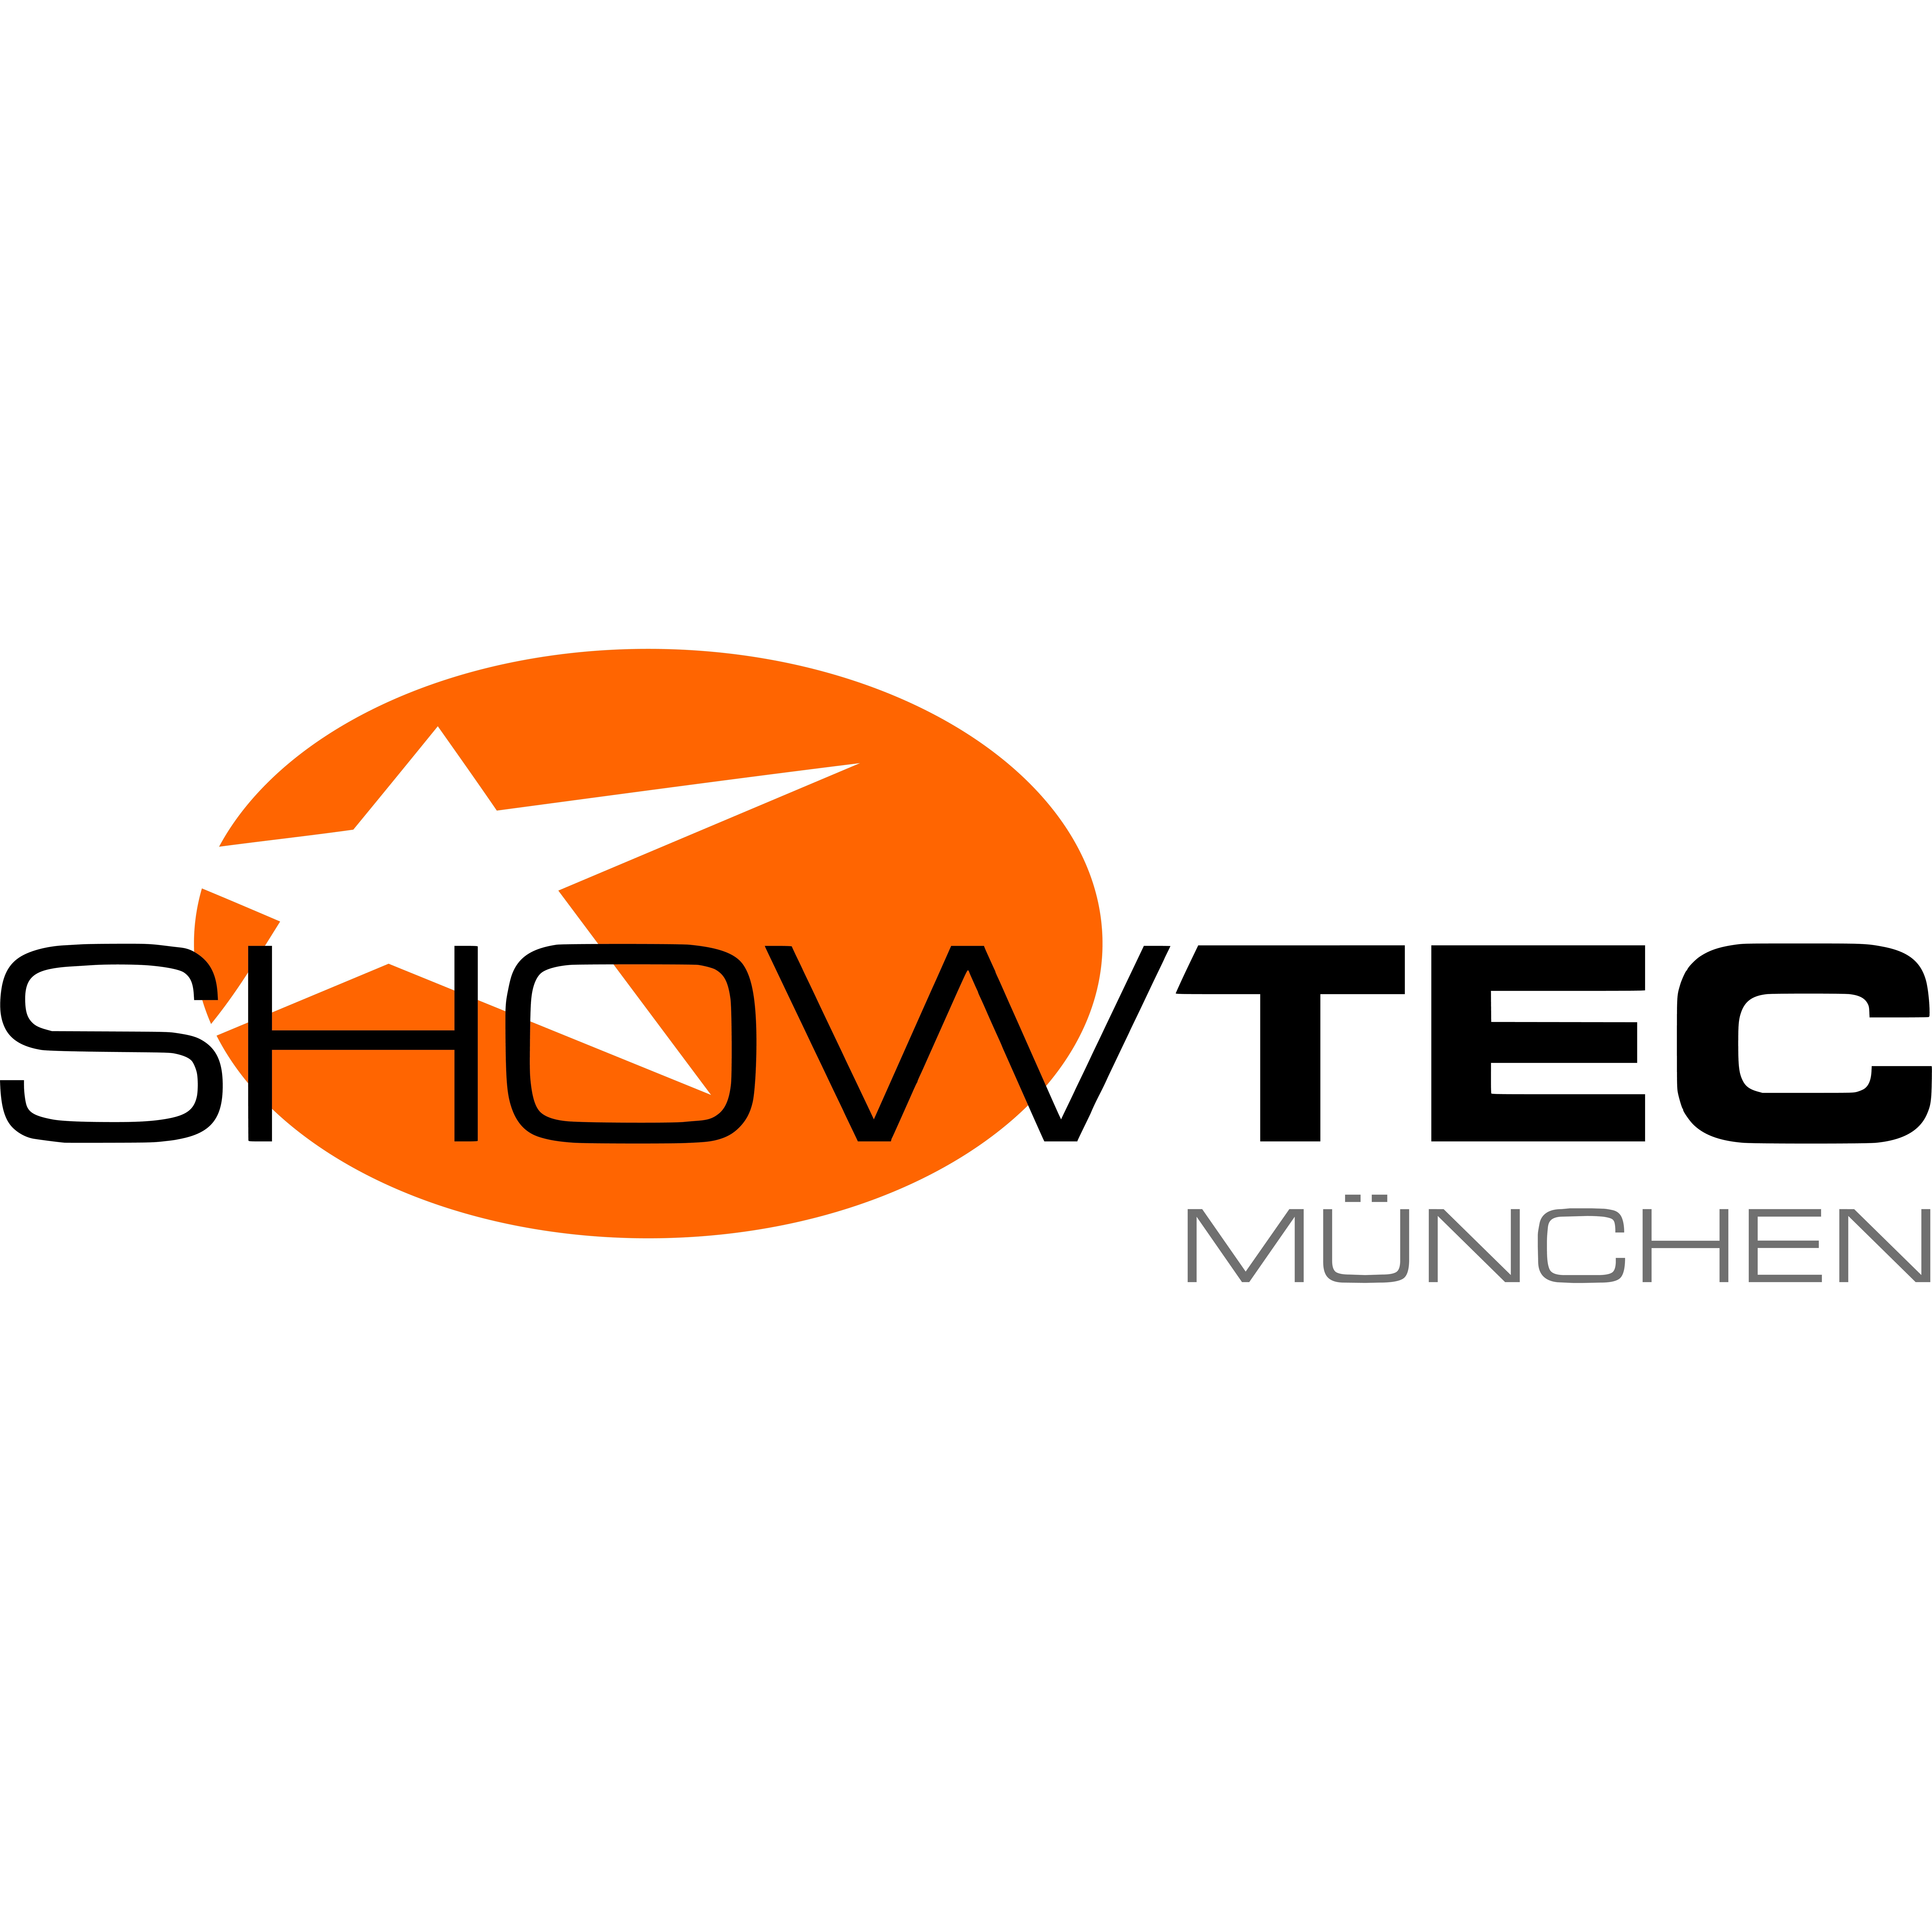 Logo SHOWTEC München GmbH